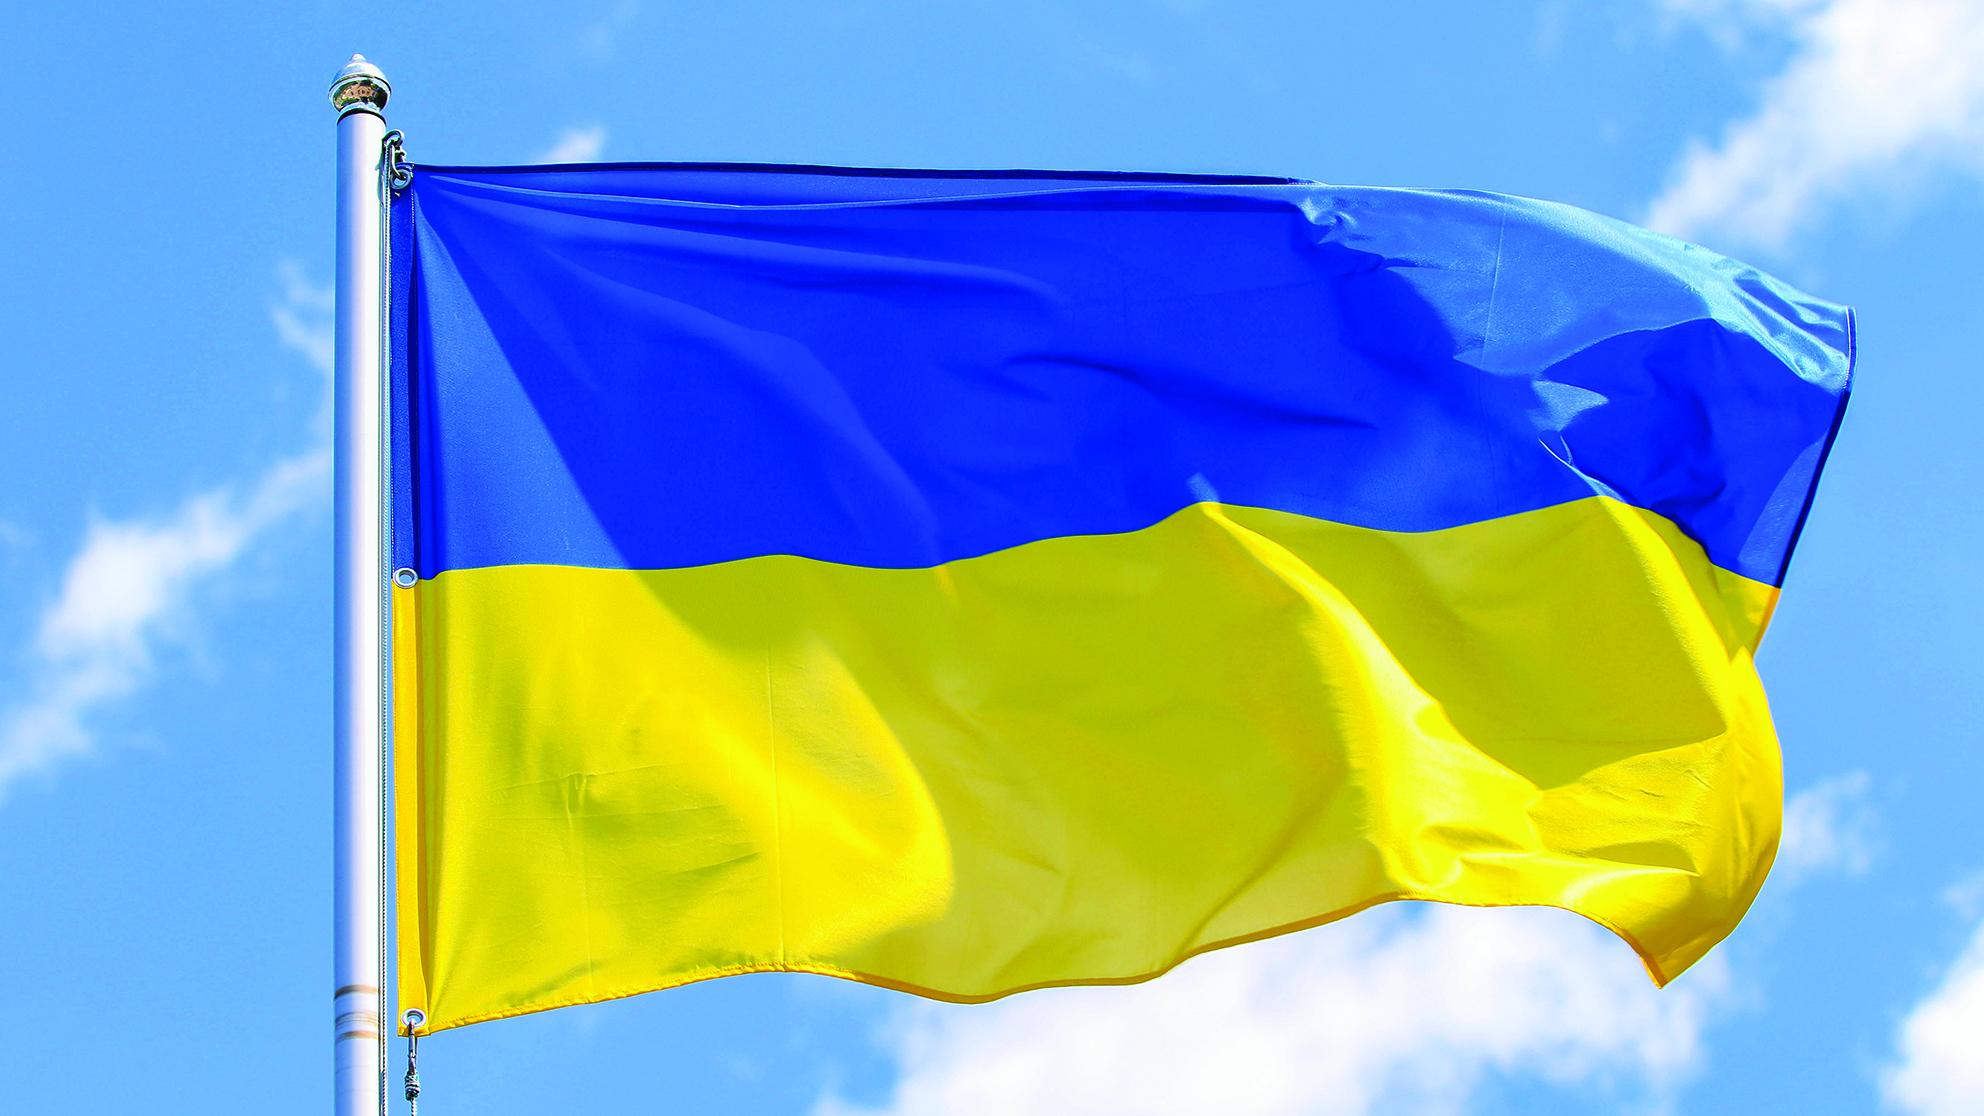 Ukraine Flag with blue sky background